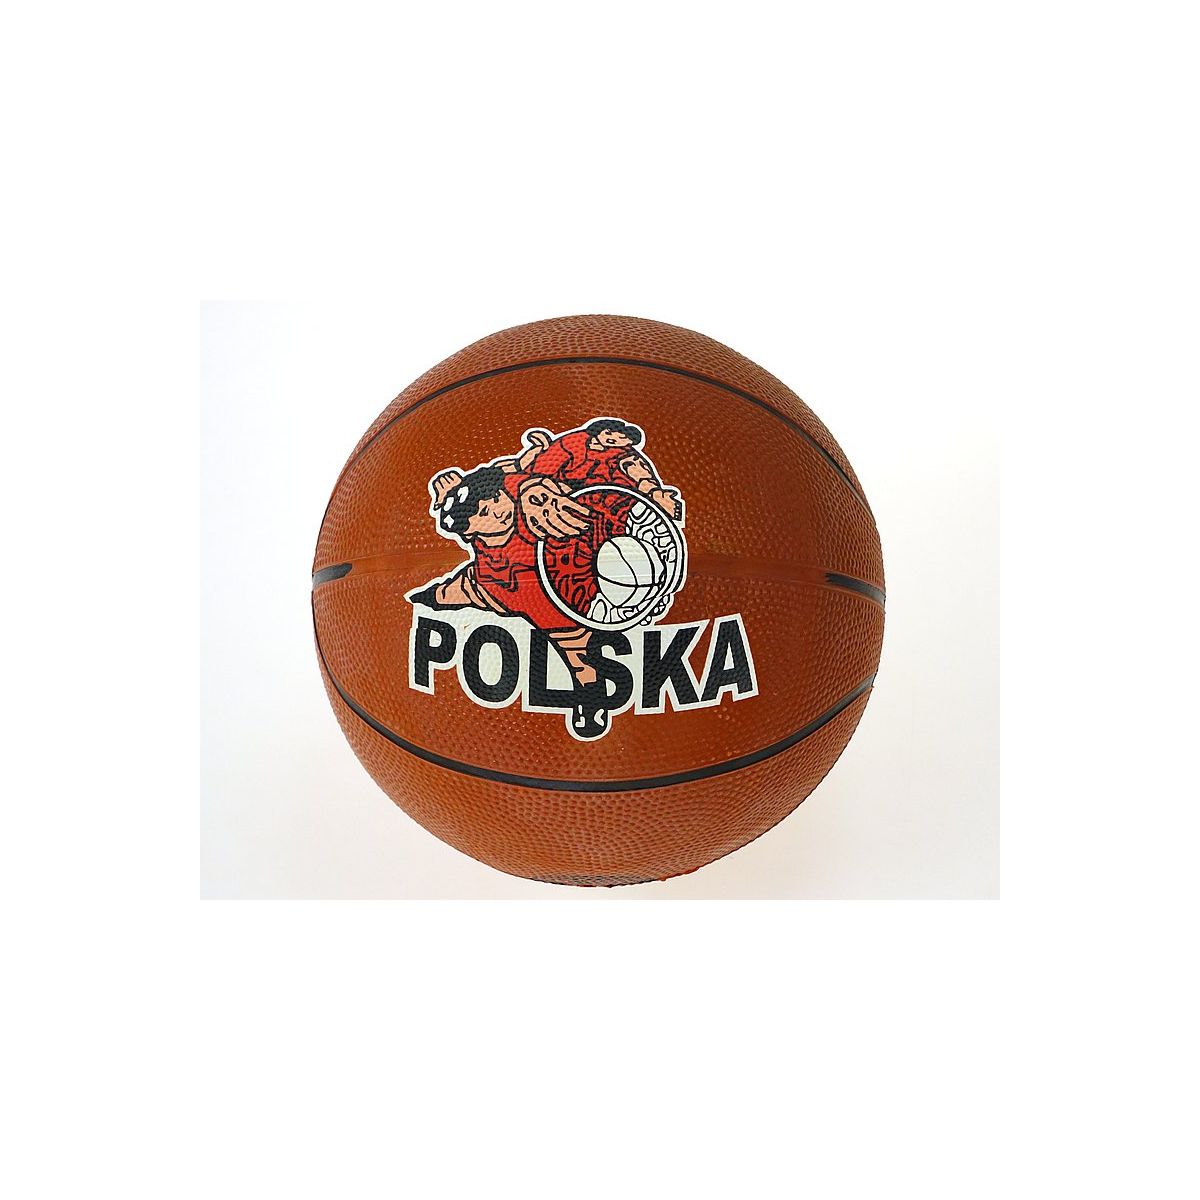 Piłka do kosza Polska Adar (590717)